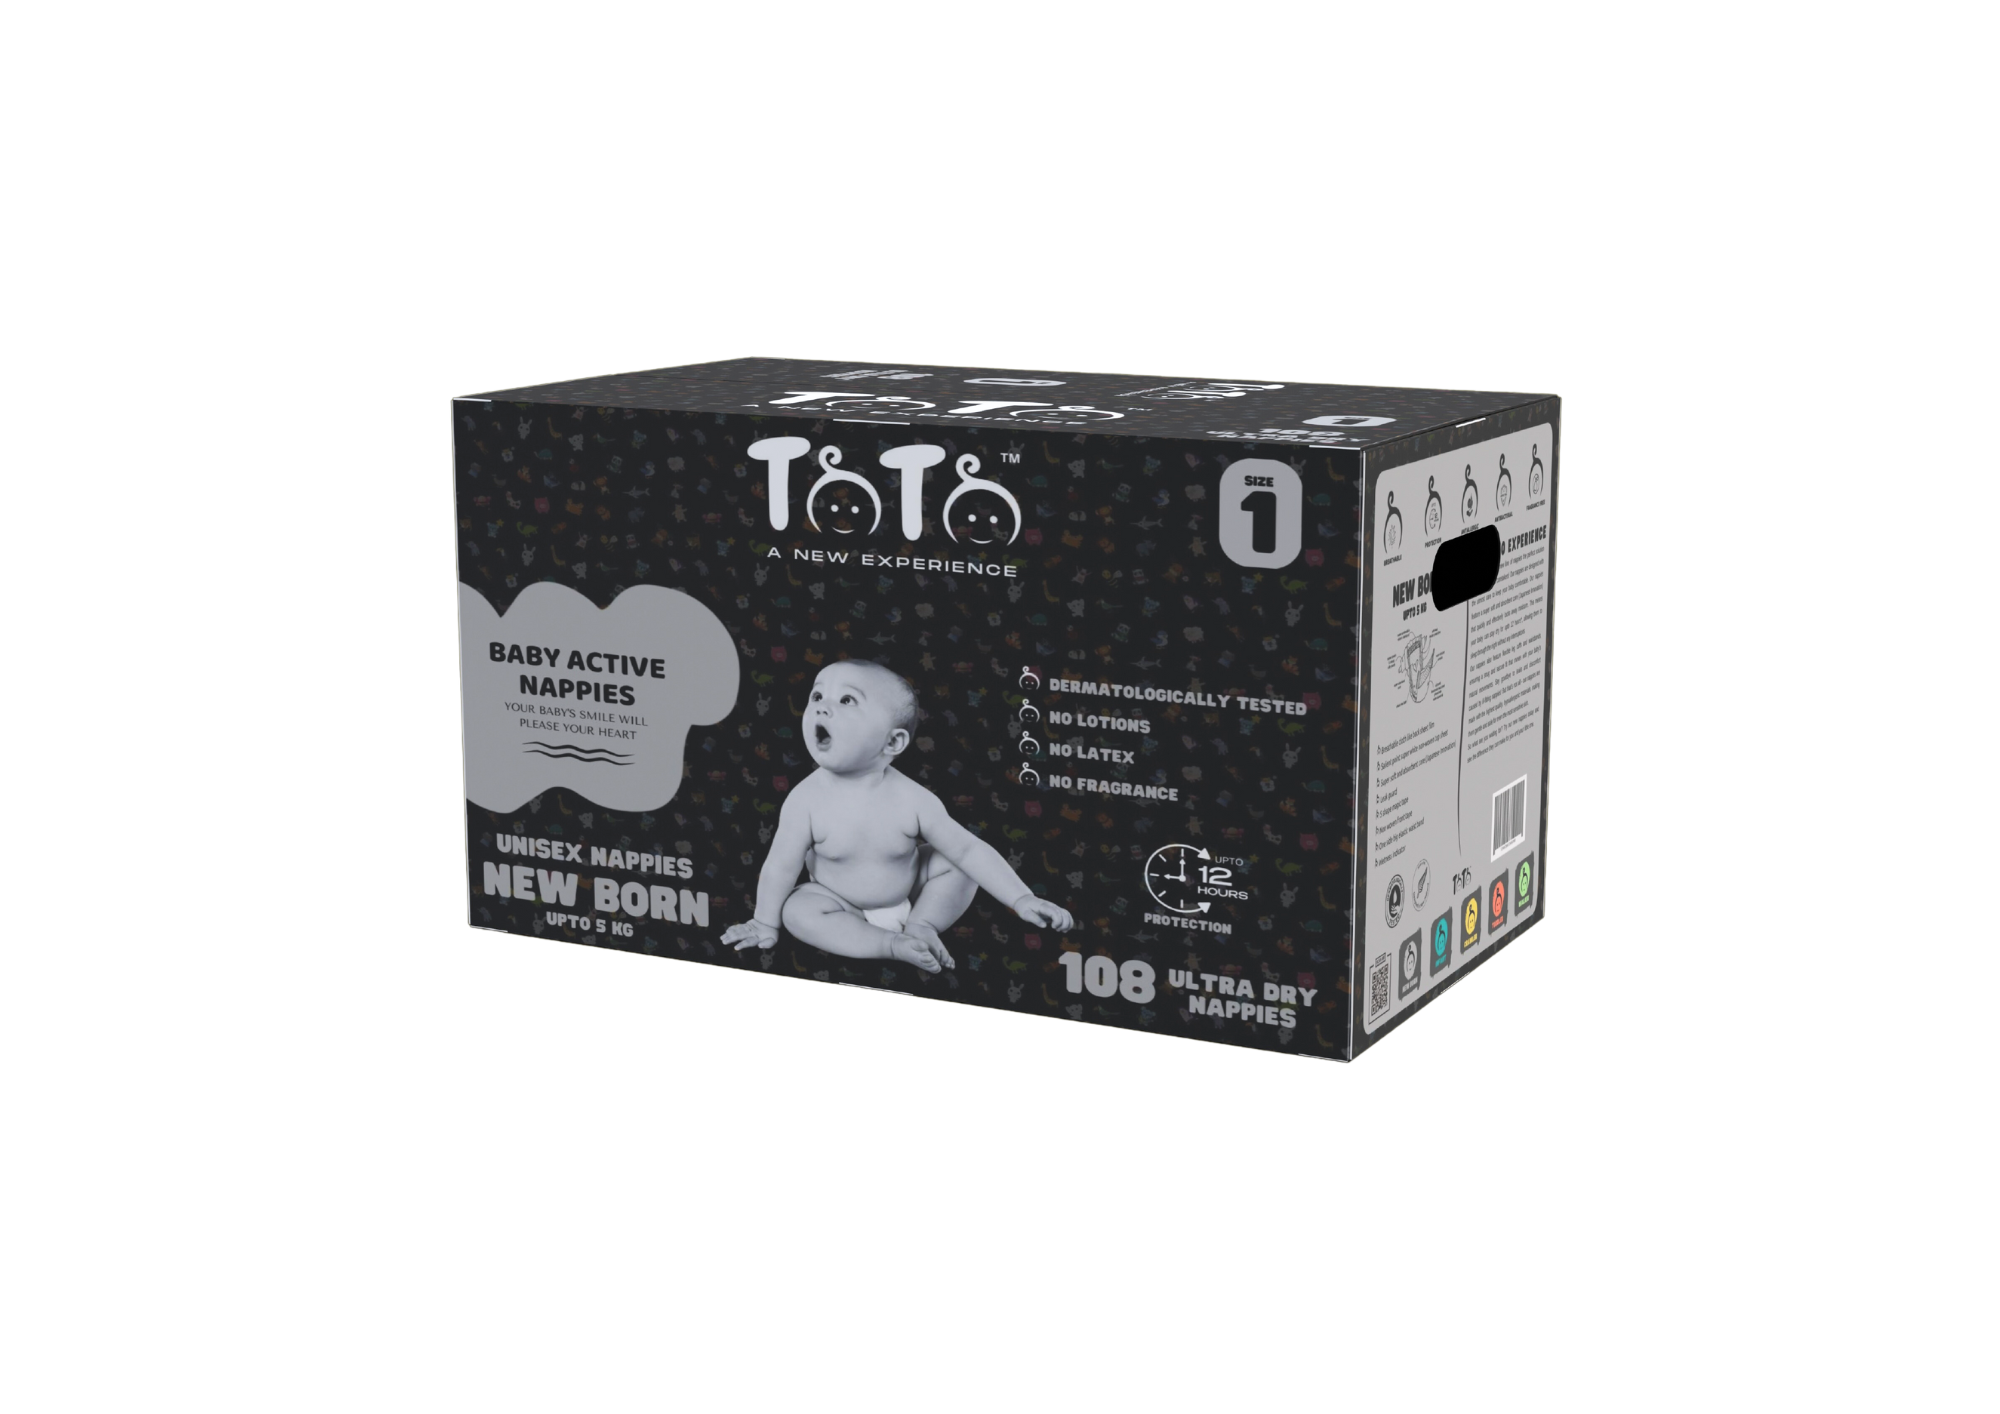 Toto Premium Nappies for Newborn - Size 1 - 108 Nappies - Upto 5kg